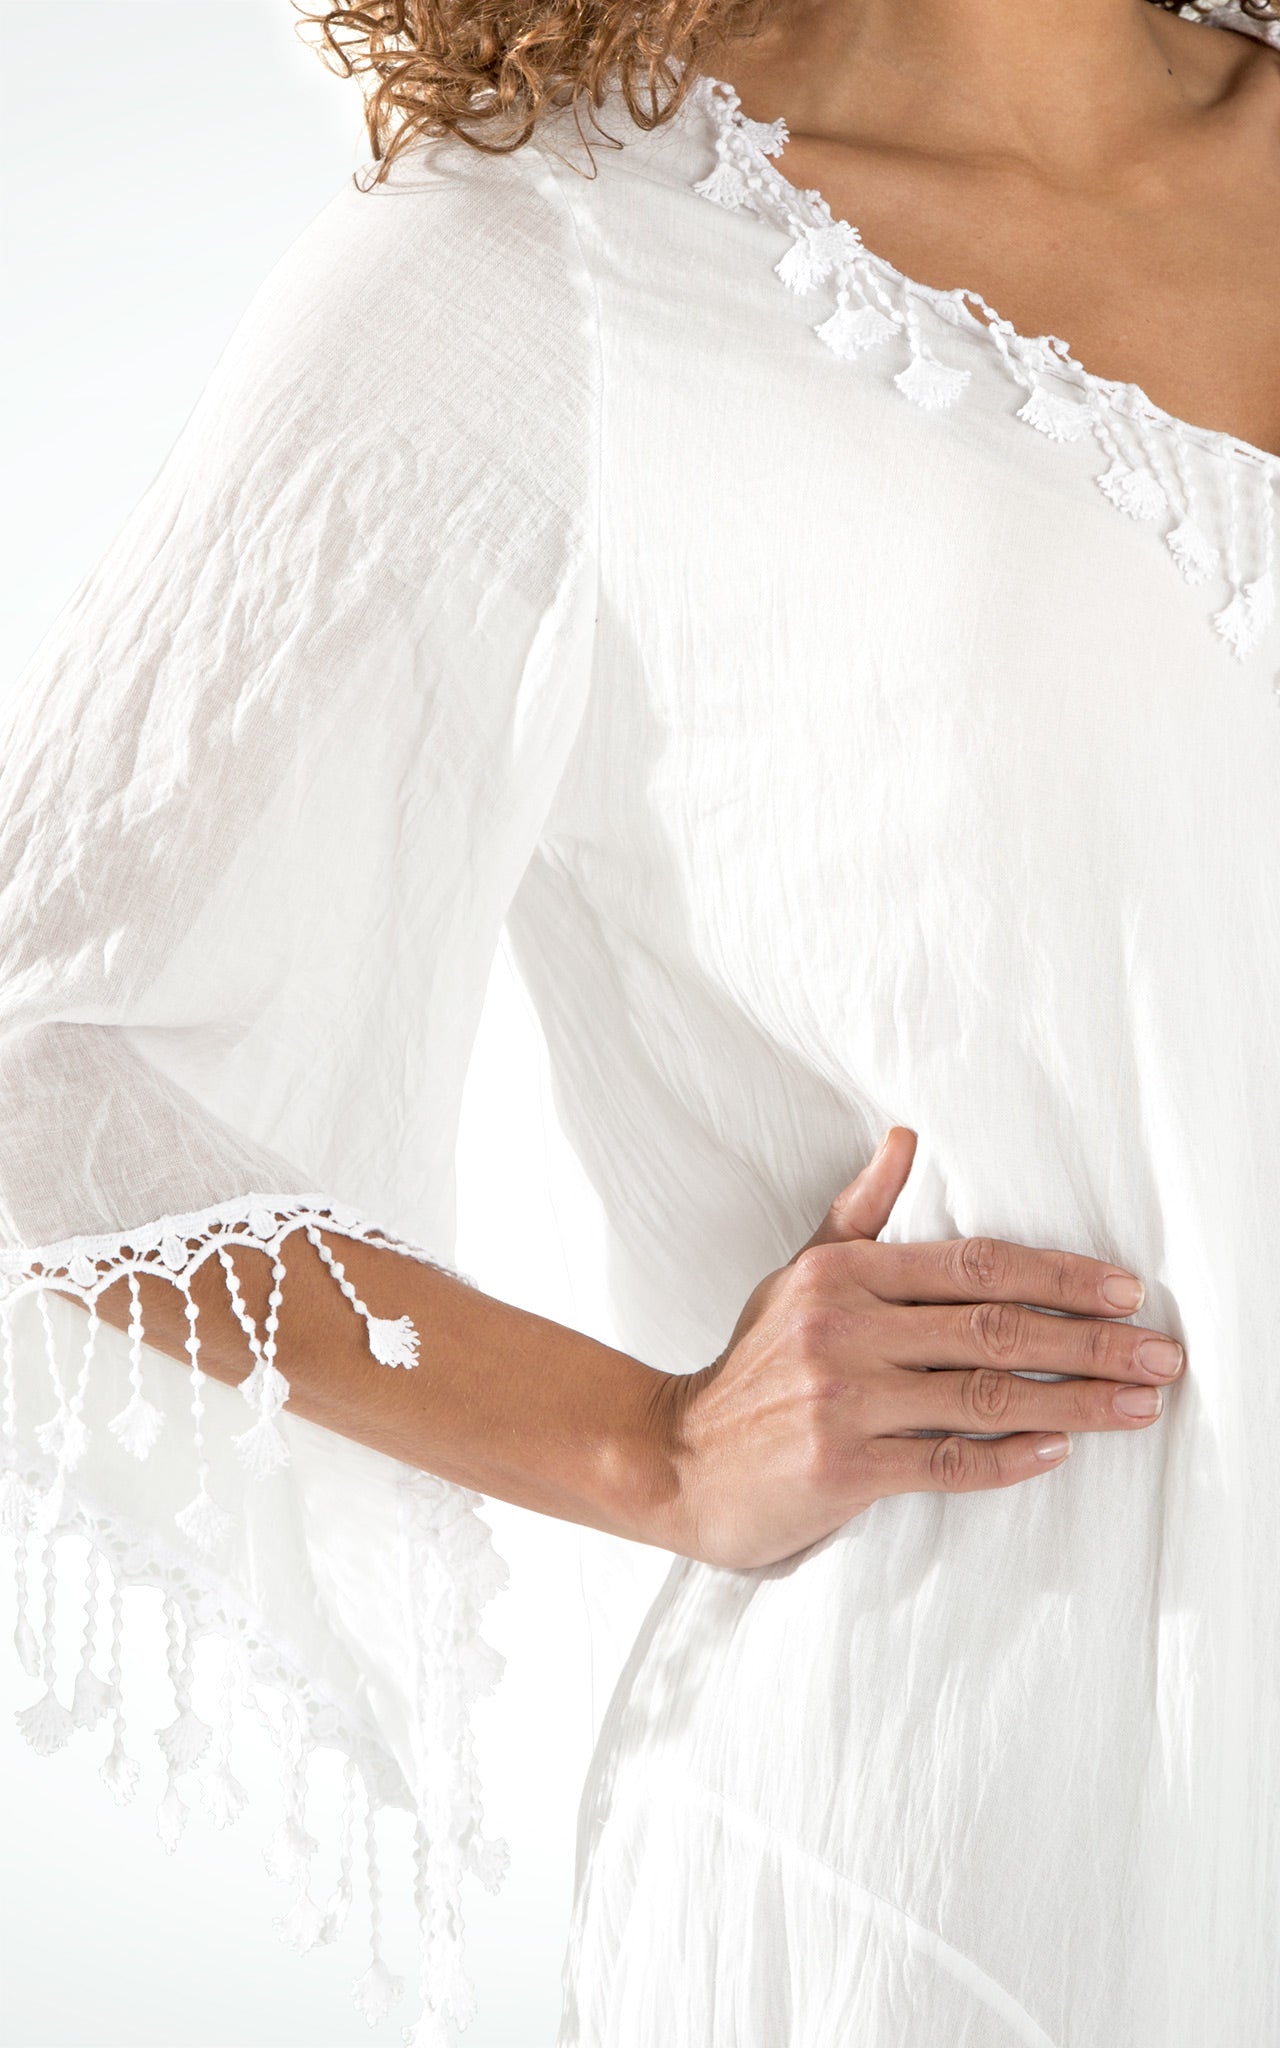 Women's White Cotton Long Dress with Lace Trim